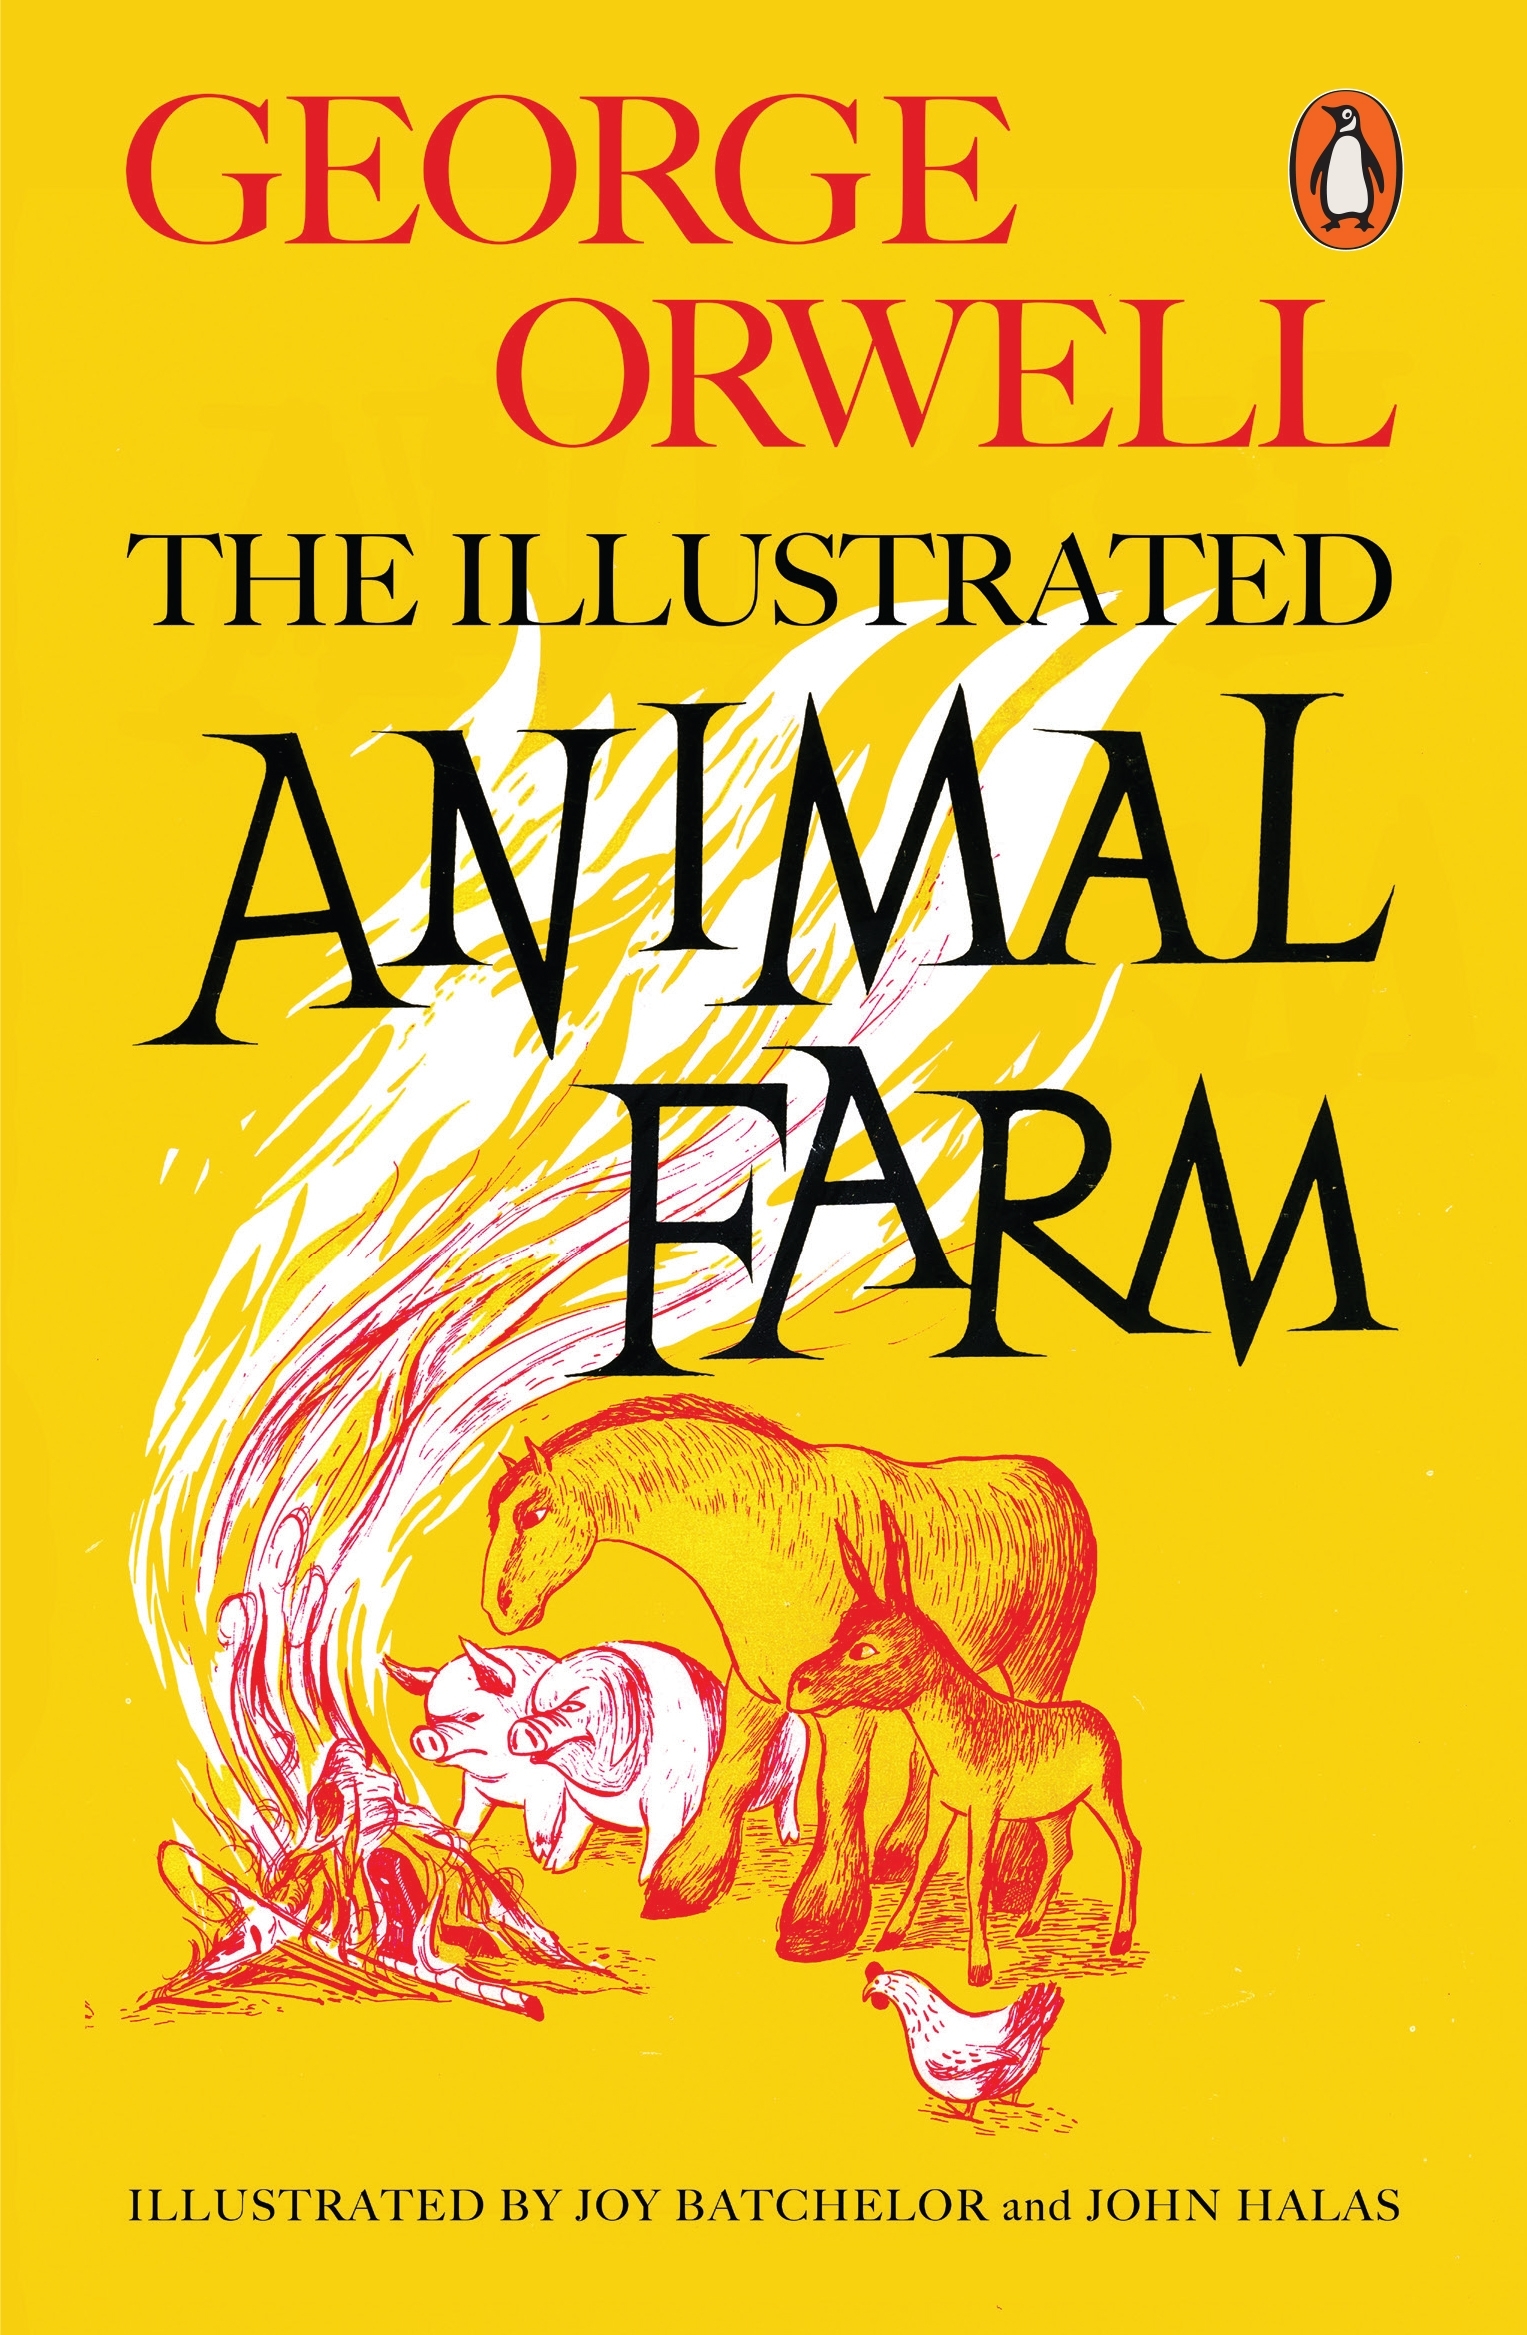 The Change Of Revolutions In George Orwells Animal Farm